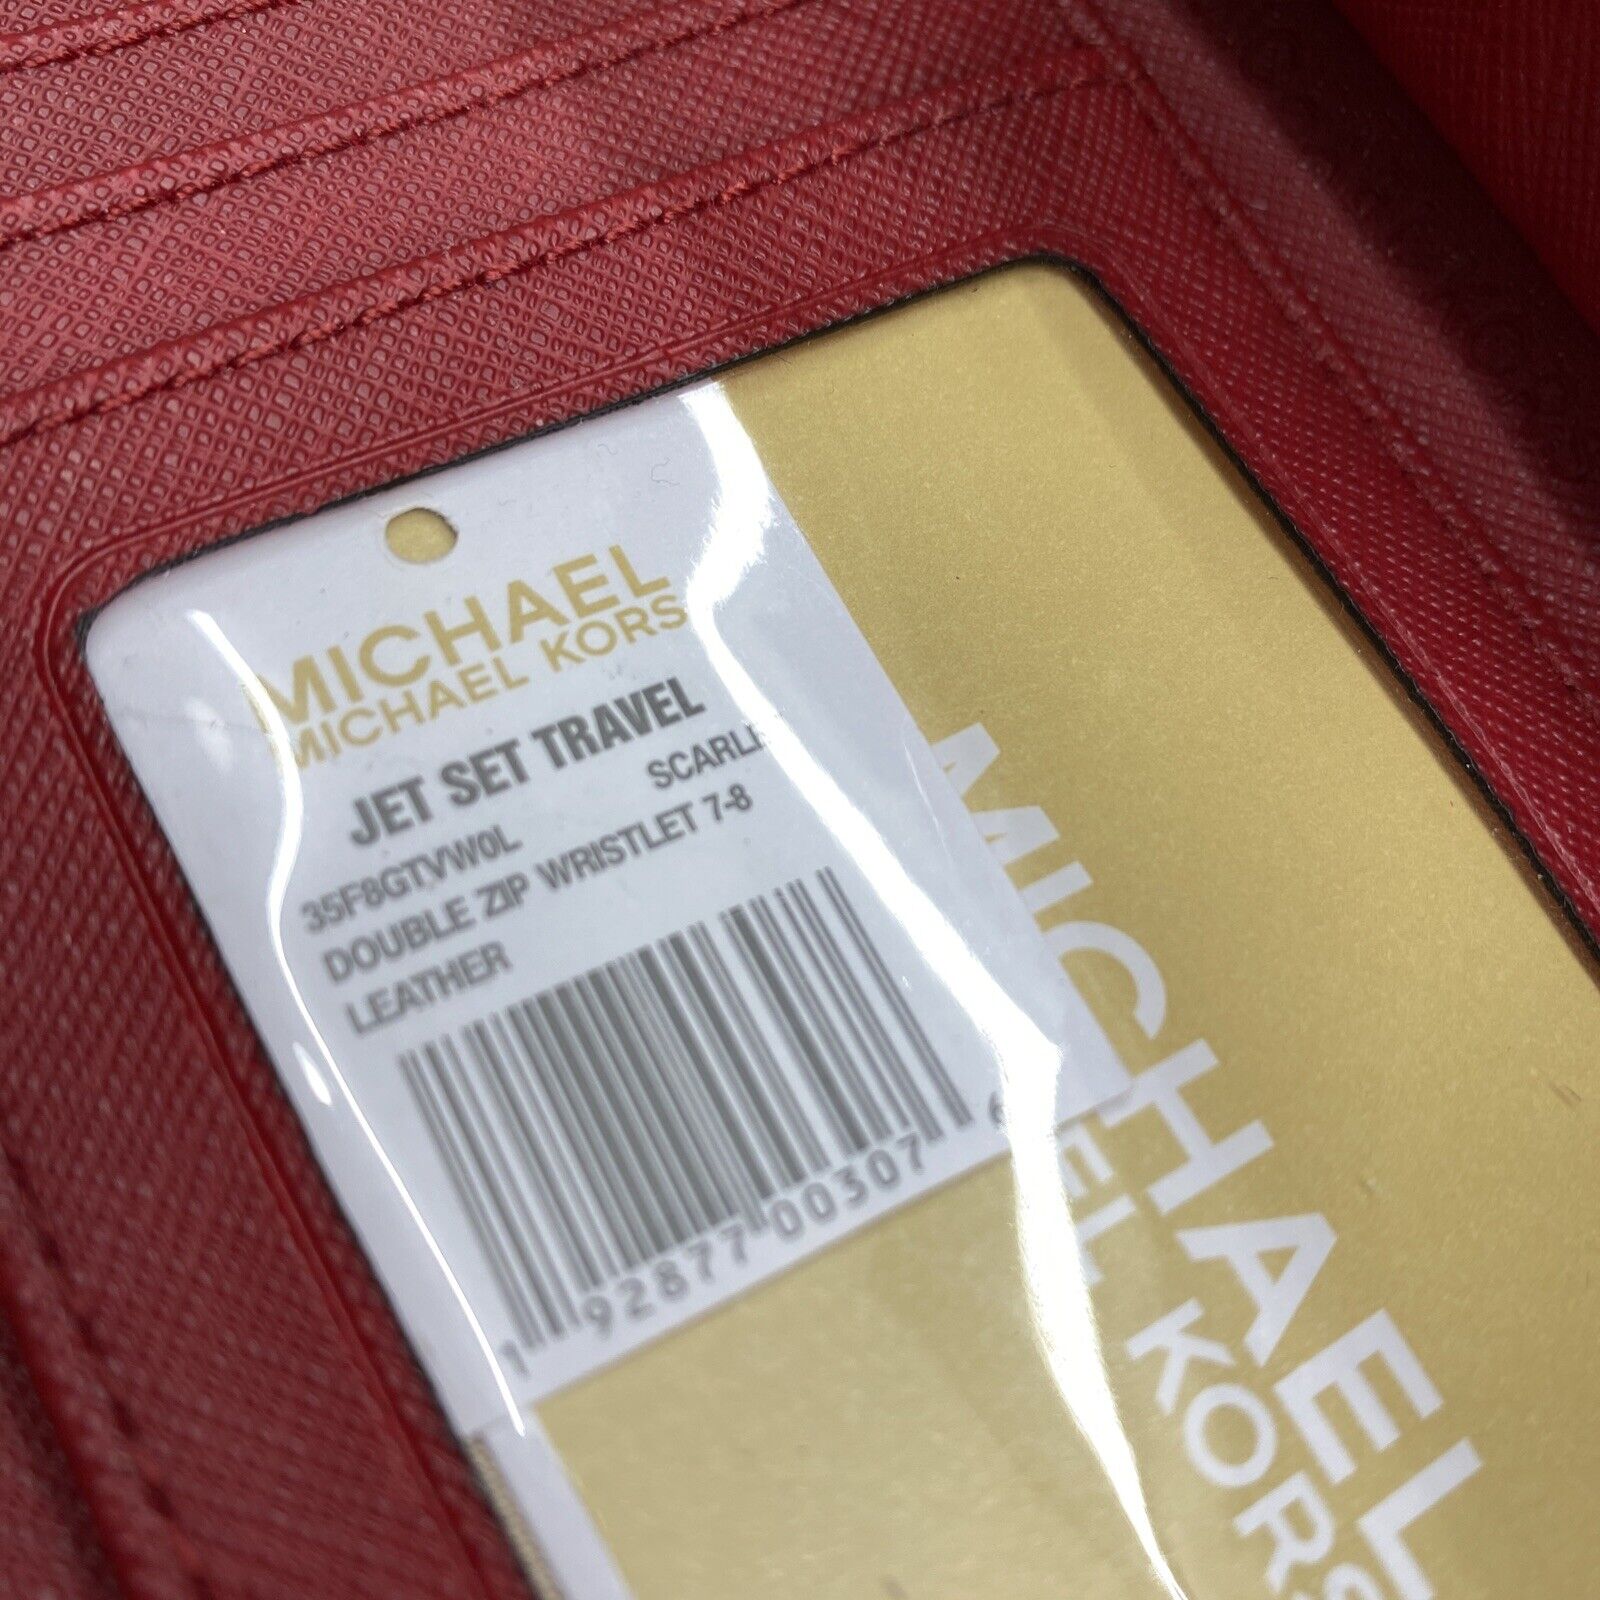 Michael Kors Jet Set Travel Large Double Zip Leather Wristlet